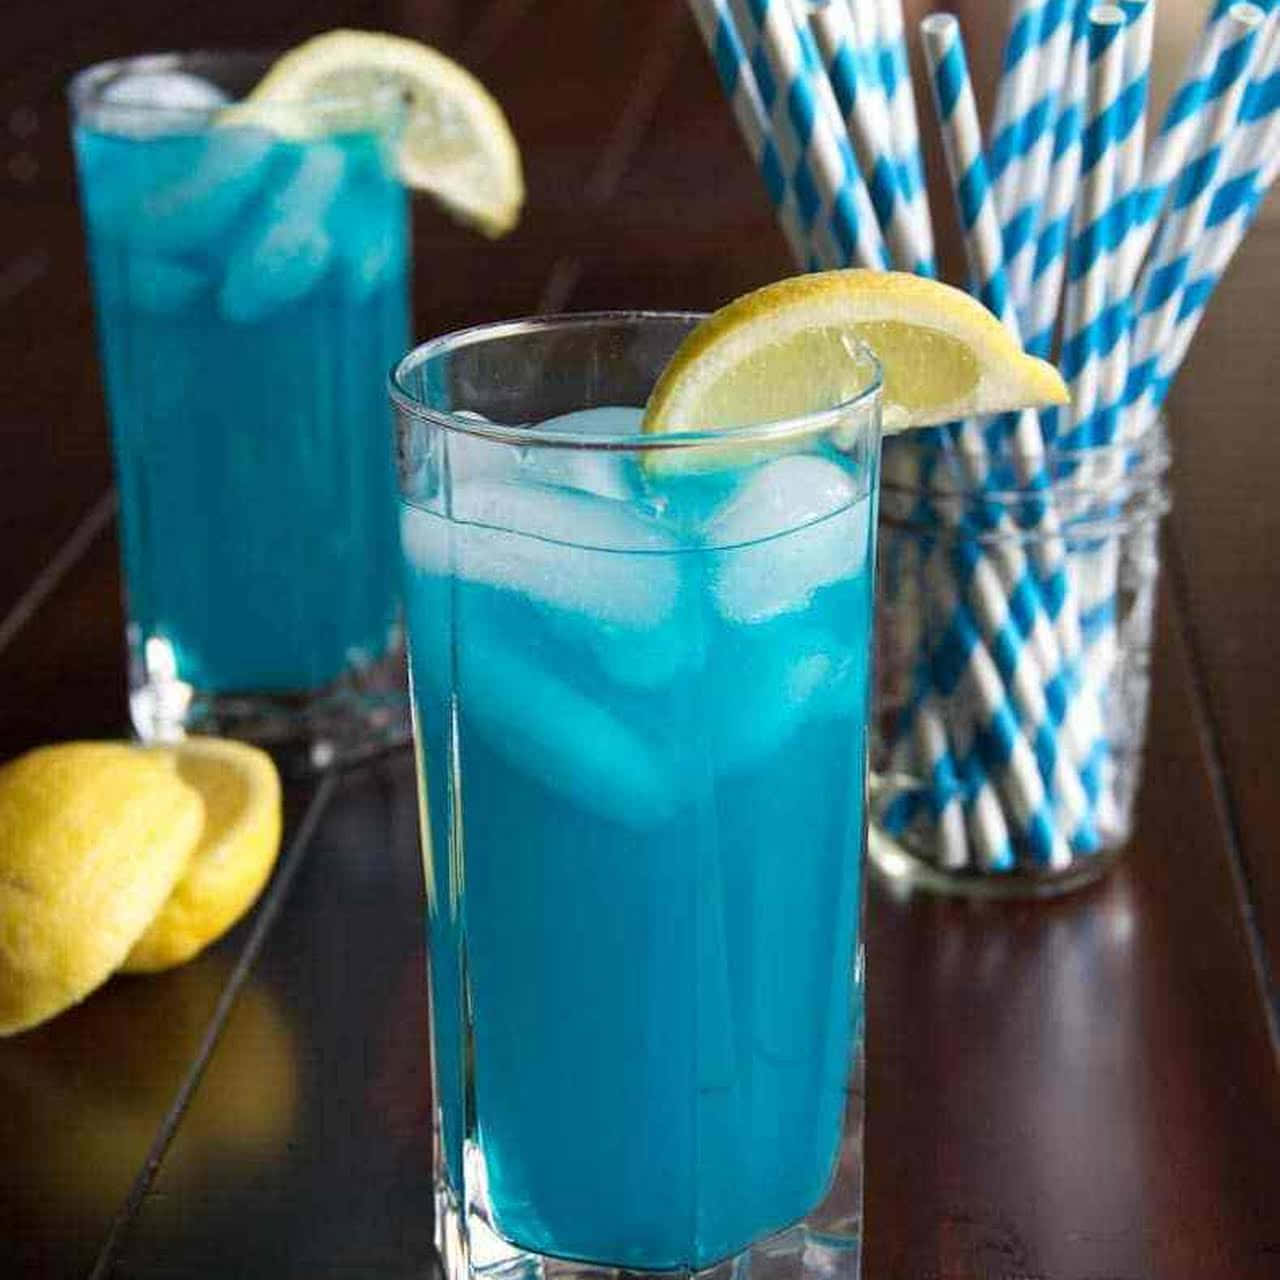 Enjoy a Tasty Refreshing Glass of Lemonade on a Sunny Day